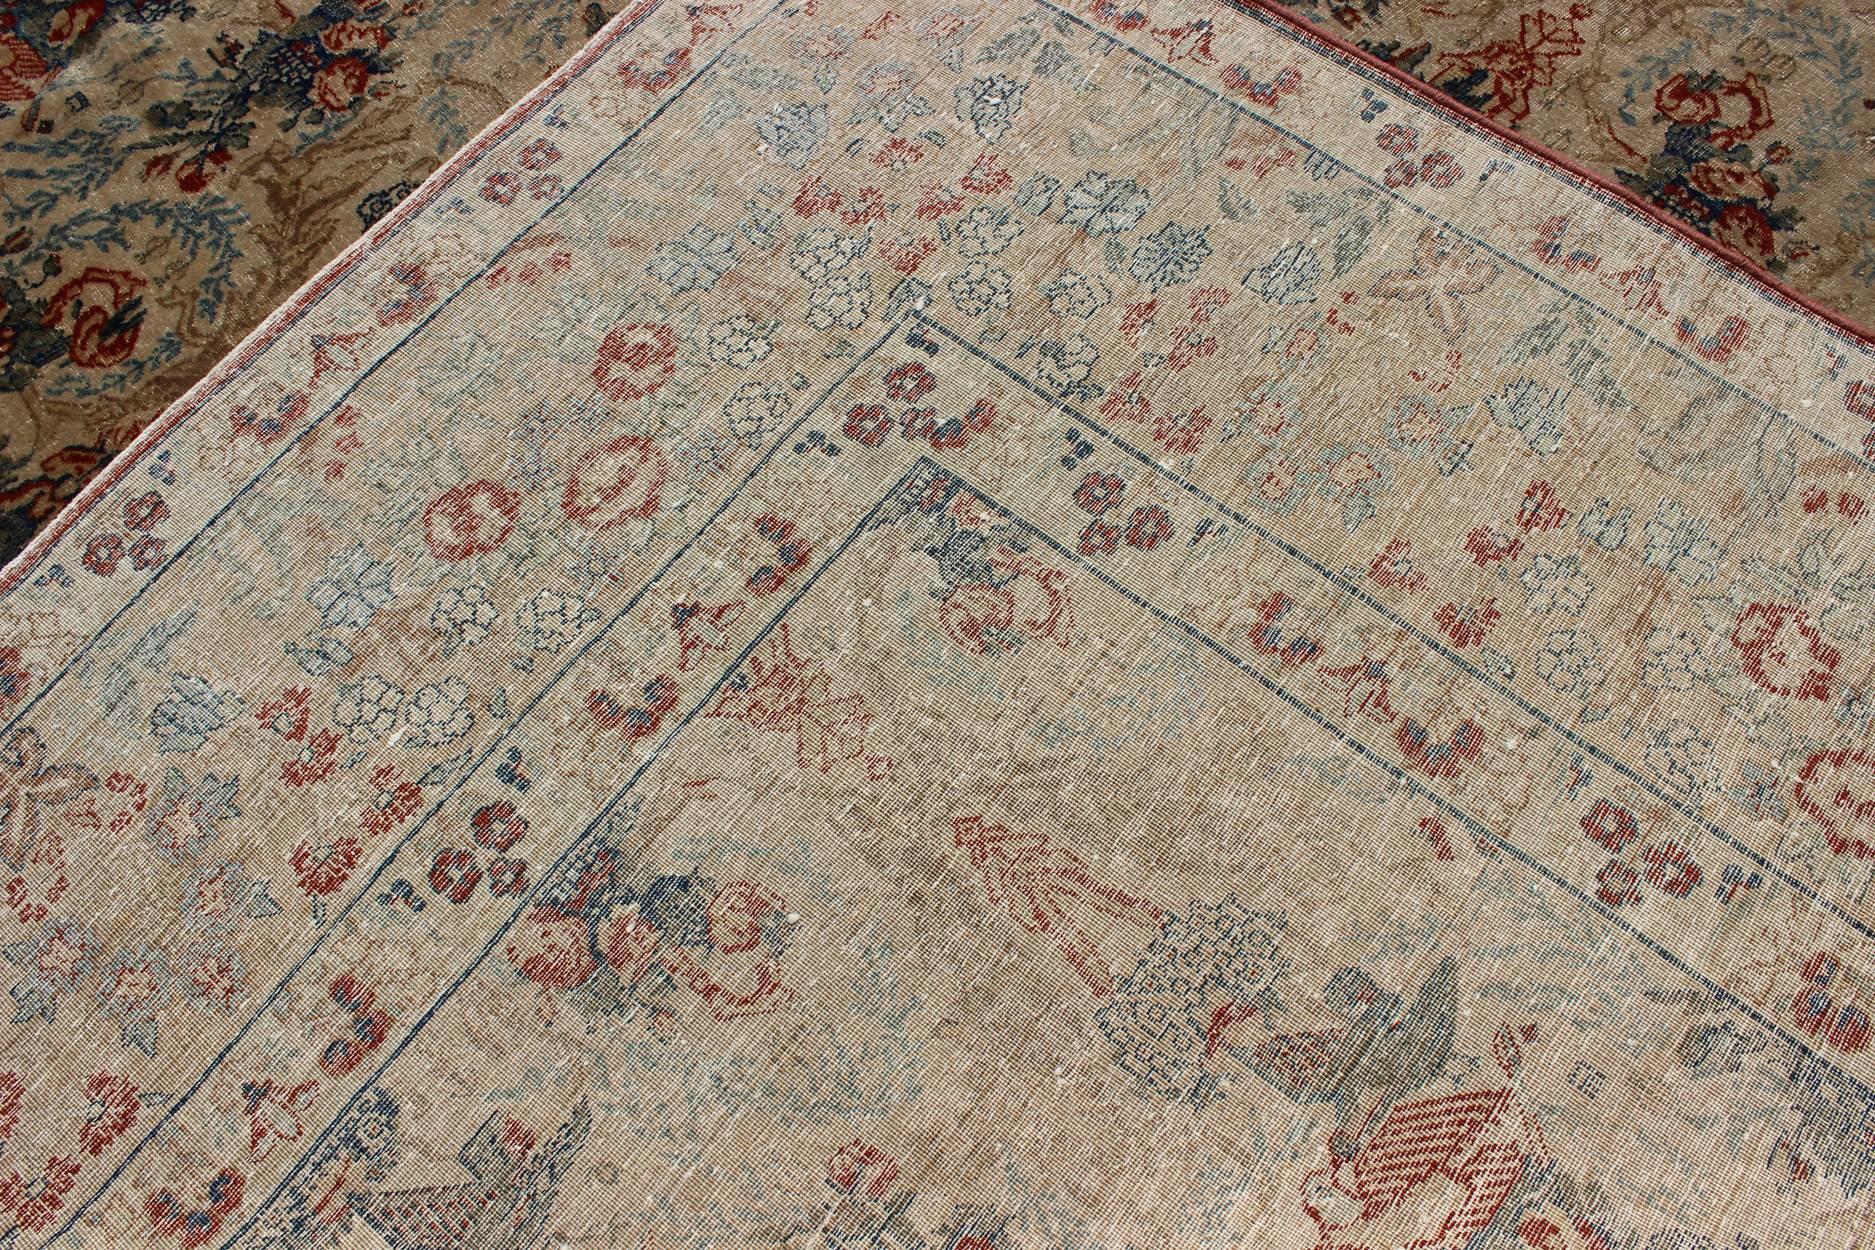 Antique Fine Tabriz Persian Carpet in Ivory Background in Florals & Bird Design For Sale 1